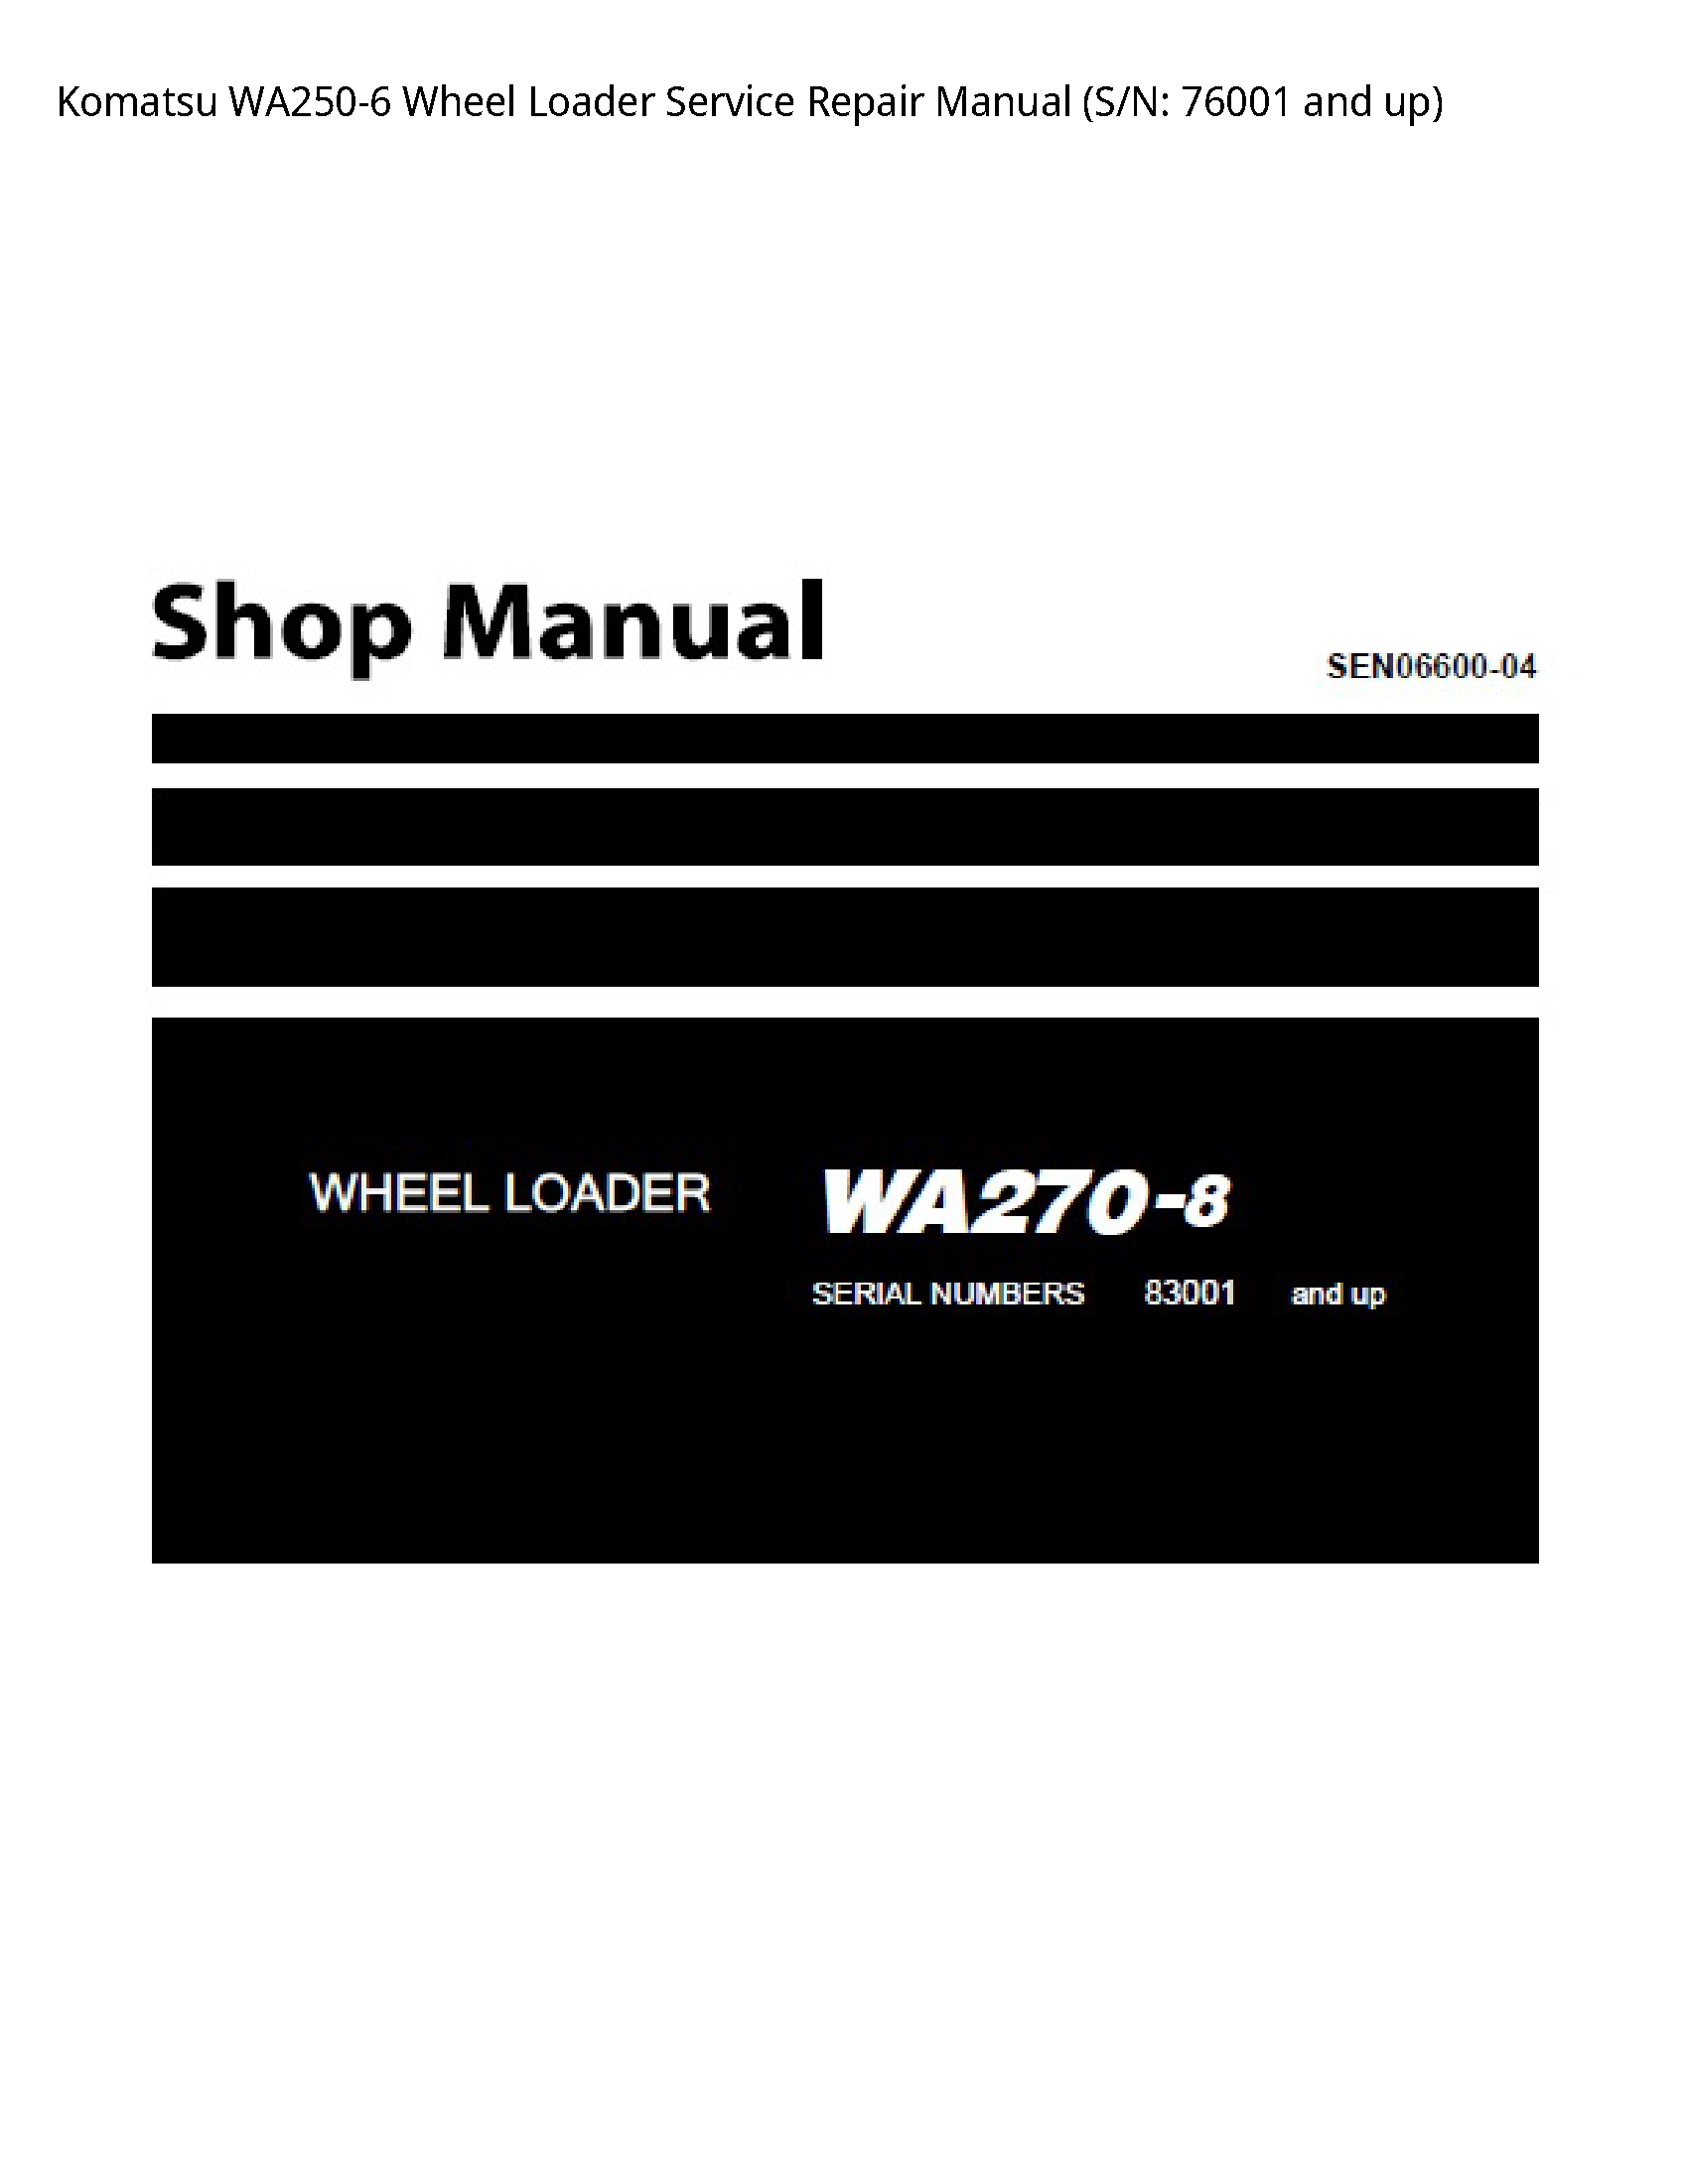 KOMATSU WA250-6 Wheel Loader manual